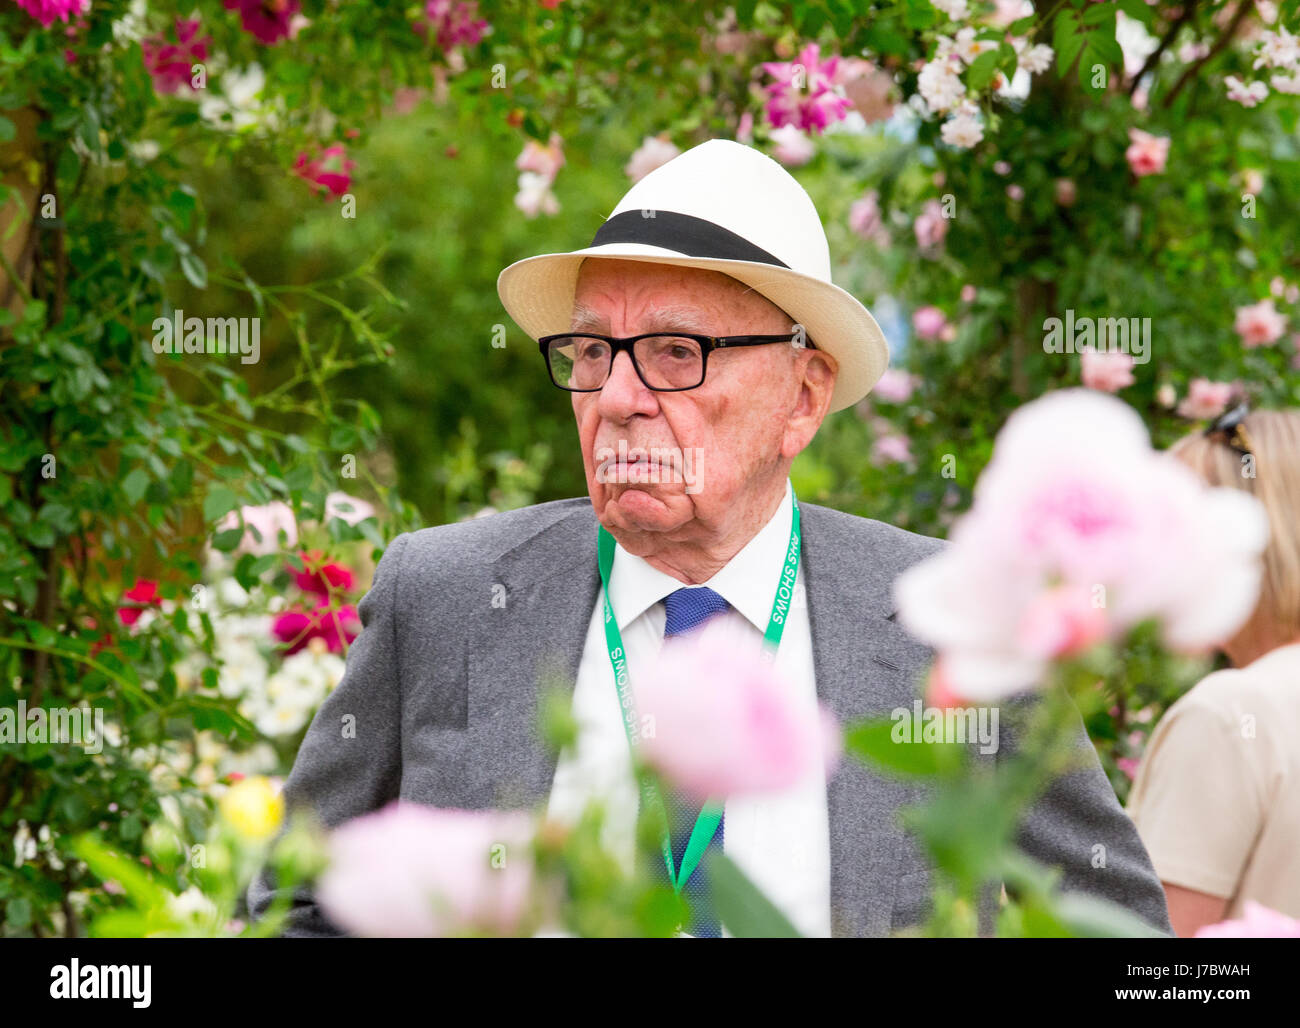 Rupert Murdoch, Australian-born American media mogul, looking at a display at the RHS Chelsea Flower Show 2017 Stock Photo